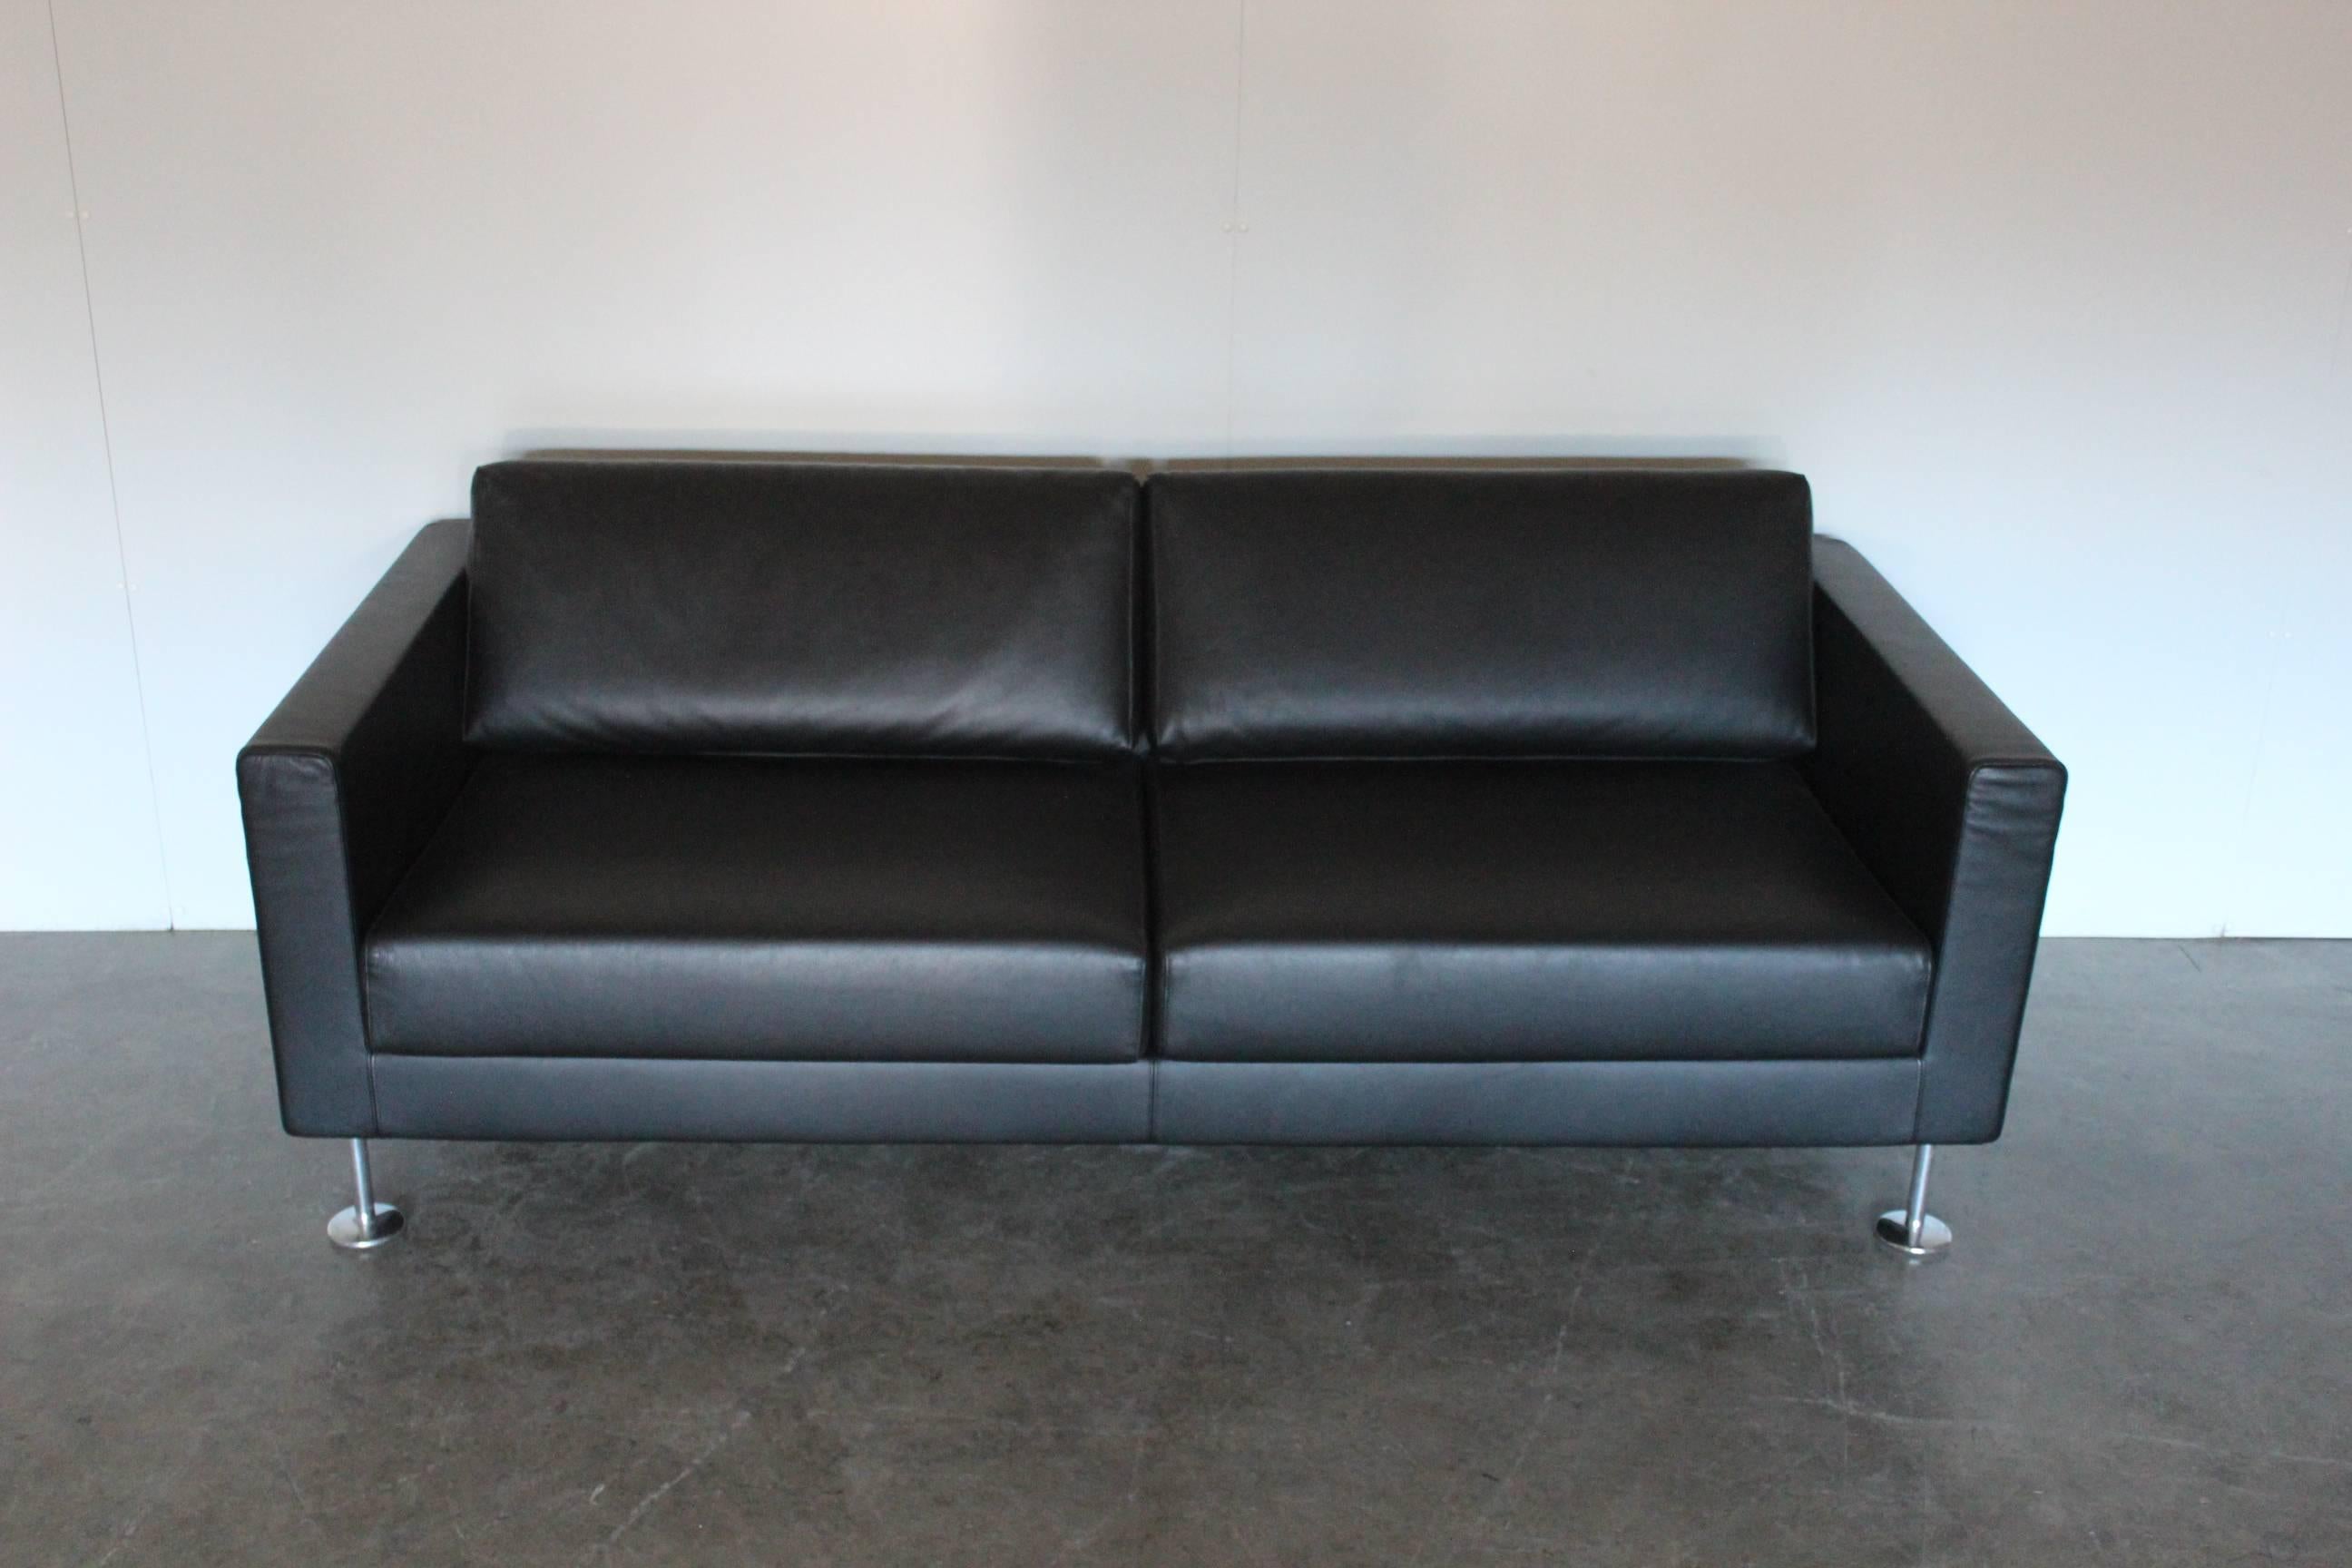 Swiss Vitra “Park” Three-Seat Sofa in Jet Black Leather by Jasper Morrison